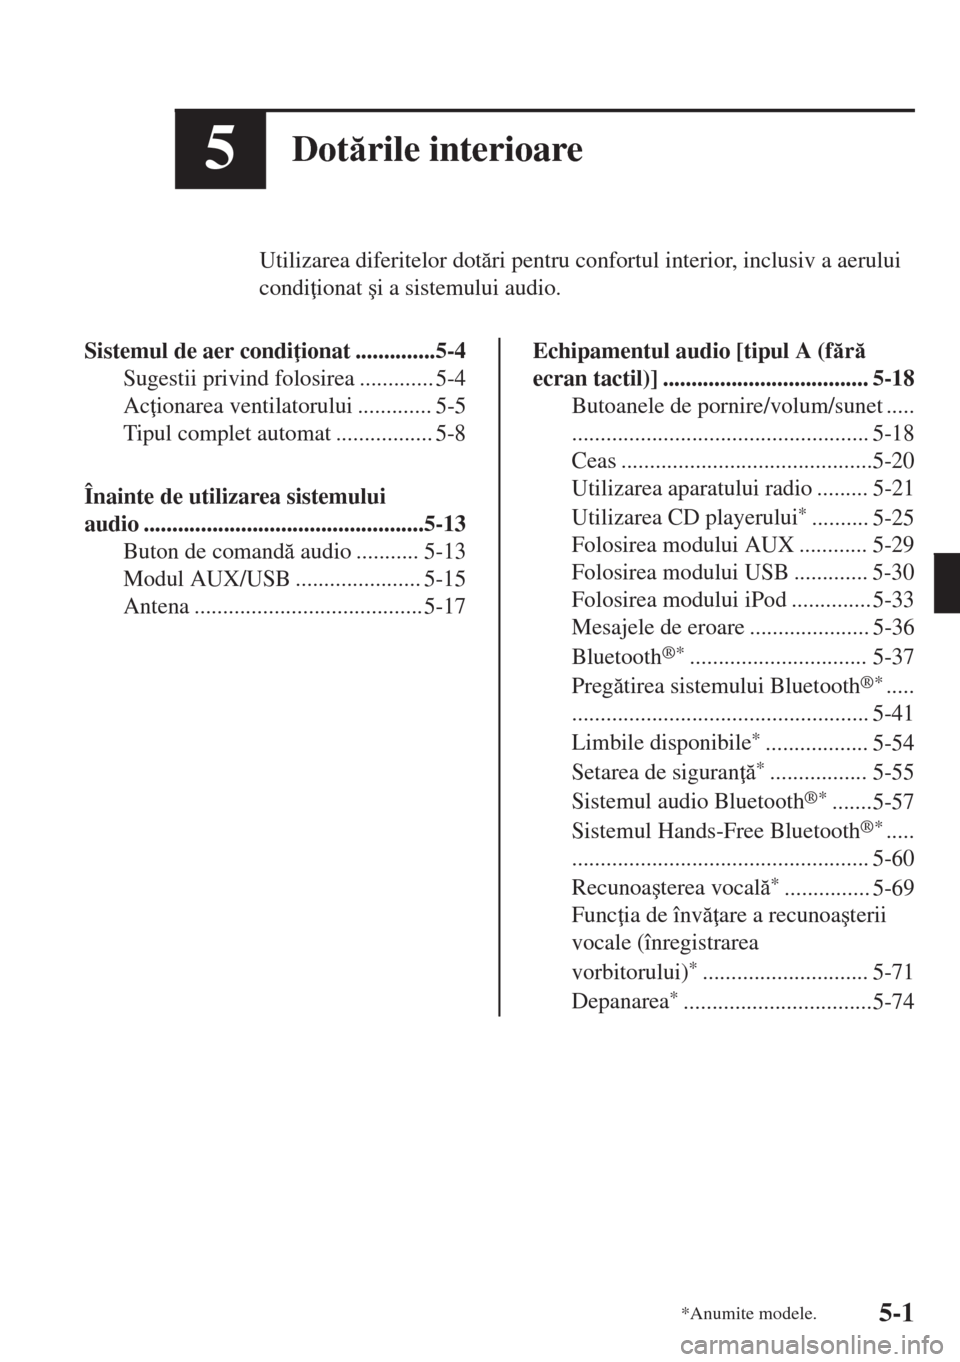 MAZDA MODEL 6 2018  Manualul de utilizare (in Romanian) 5Dotrile interioare
Utilizarea diferitelor dotri pentru confortul interior, inclusiv a aerului
condi ionat �úi a sistemului audio.
Sistemul de aer condi ionat ..............5-4
Sugestii privind